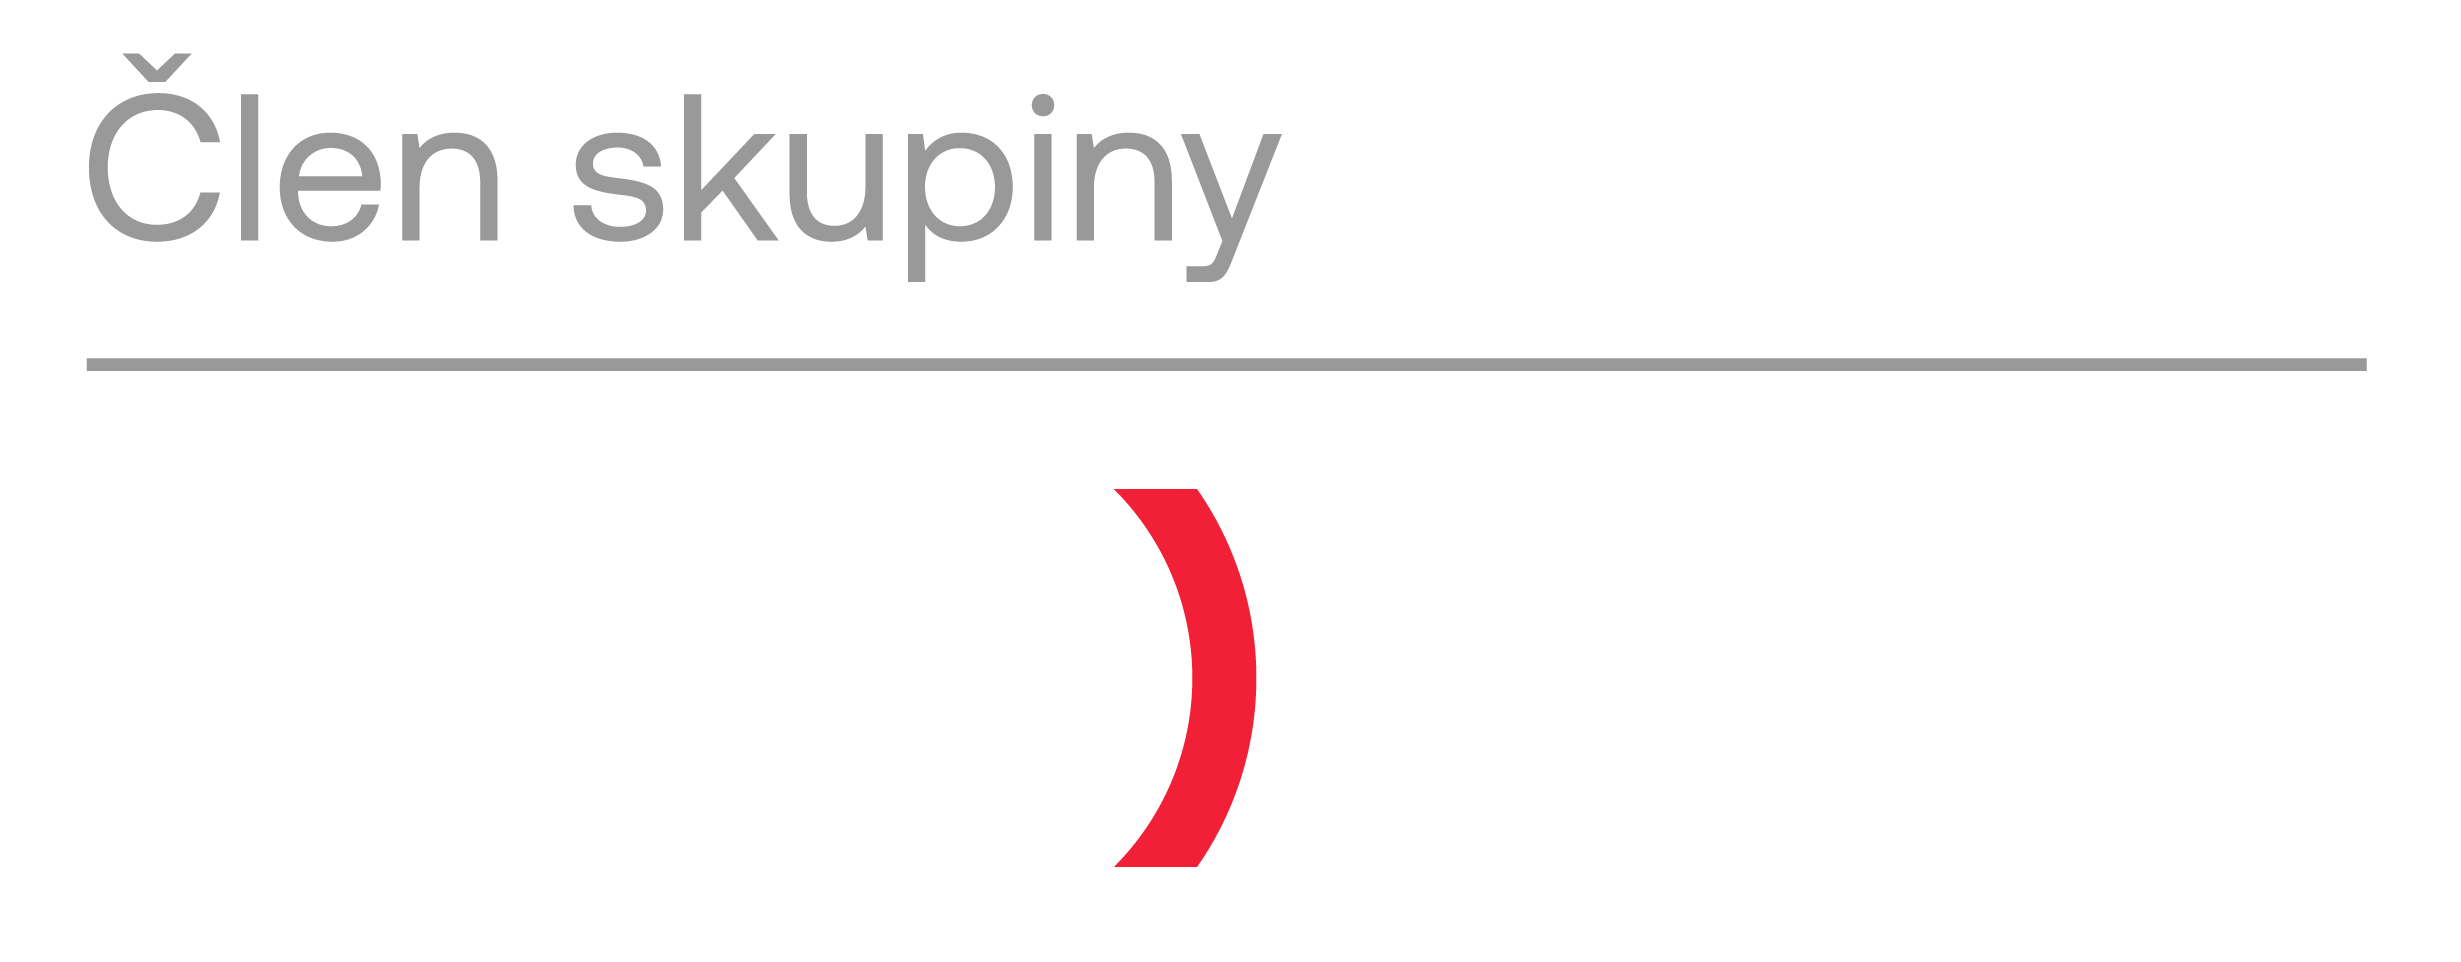 CZECHOSLOVAK GROUP